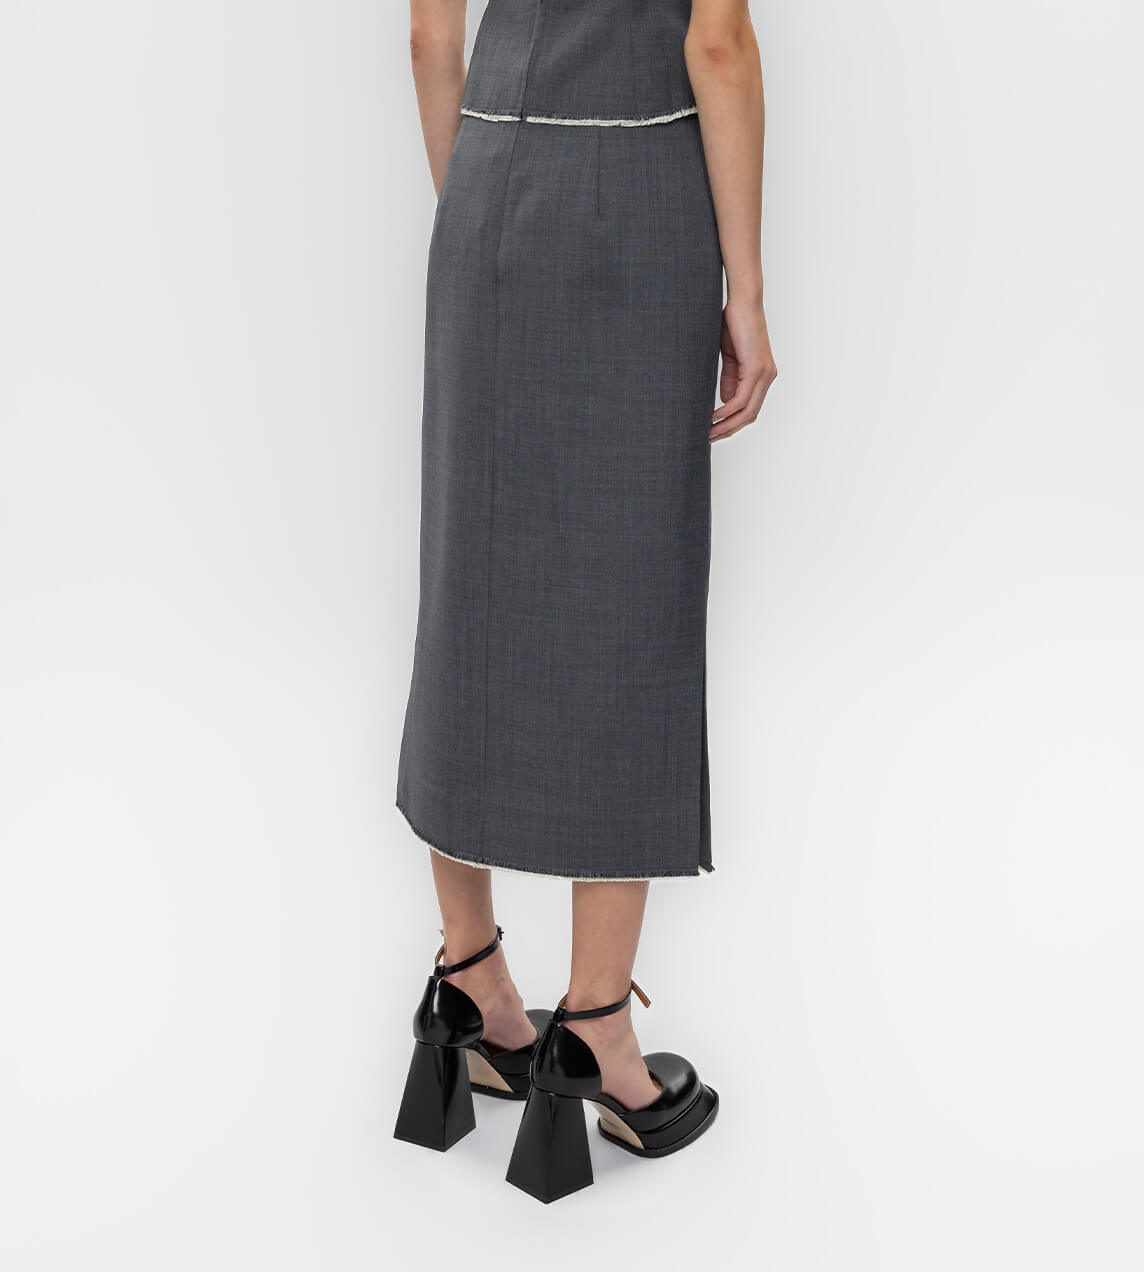 ShuShu/Tong - Pencil Skirt Grey